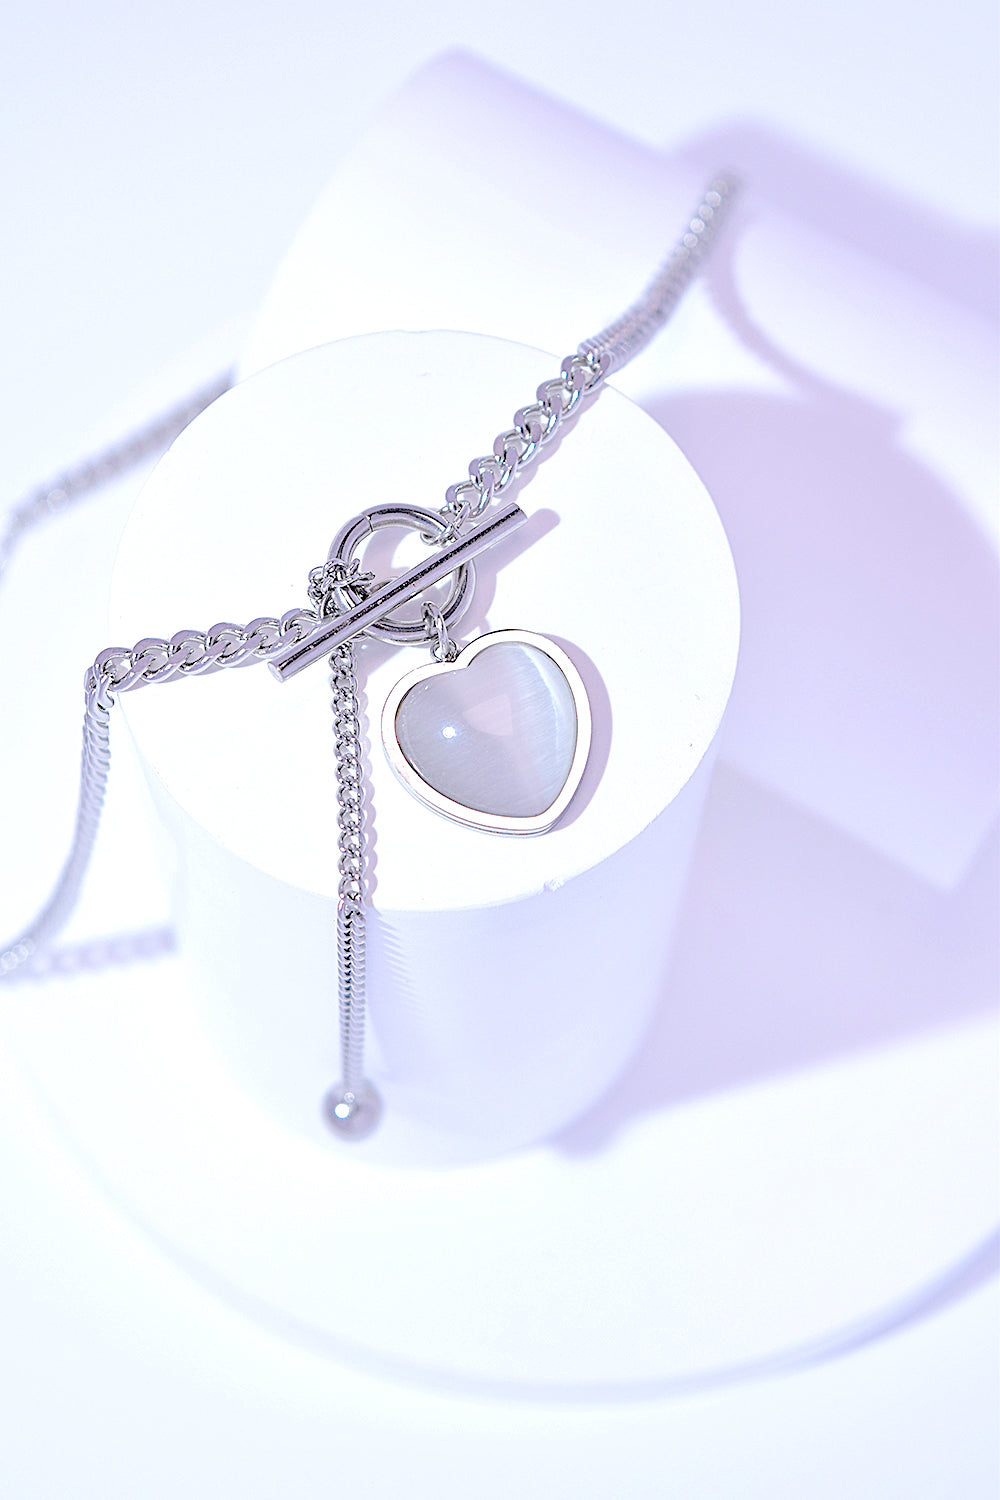 Titanium Steel Heart Necklace Trendsi